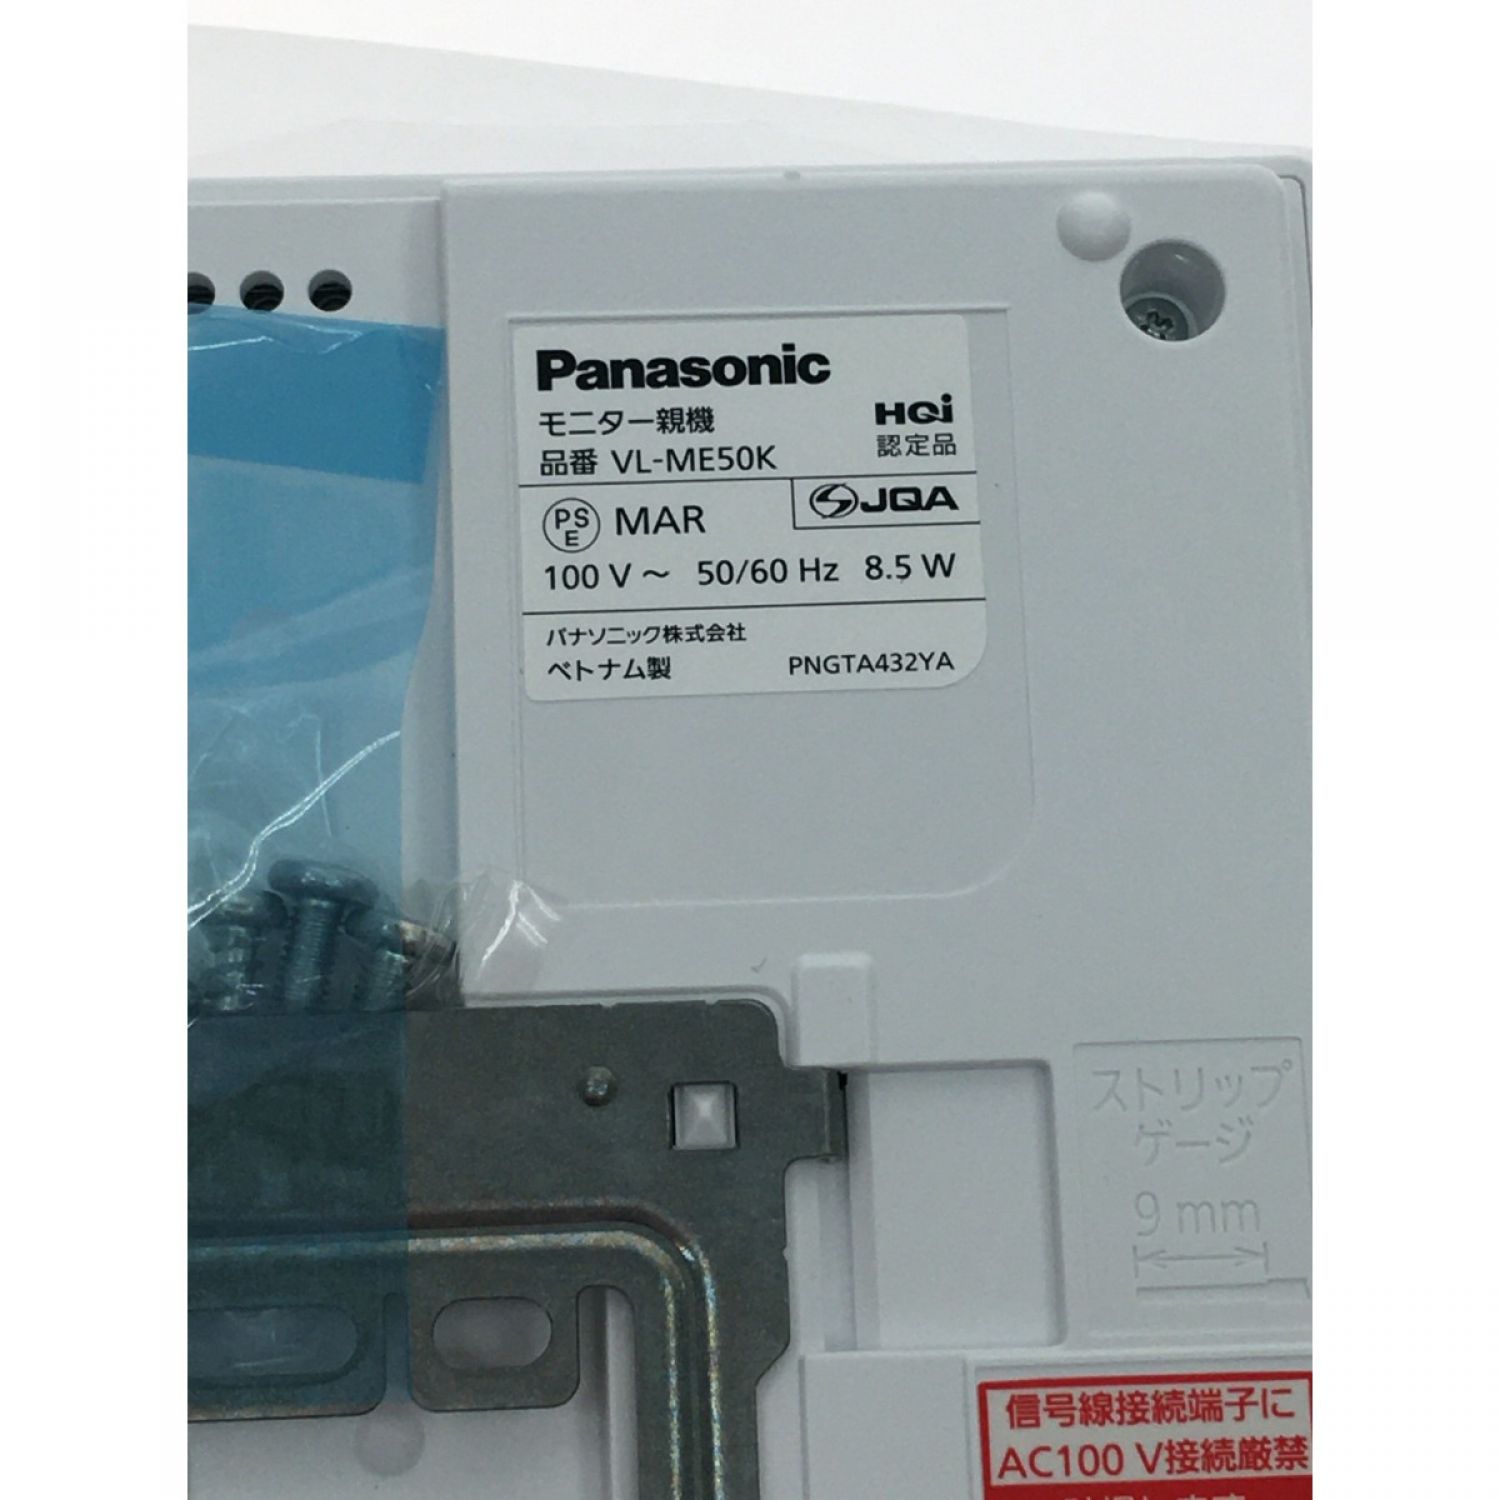 Panasonic ドアホン パナソニック VL-SE50KFA テレビドアホン 2-2